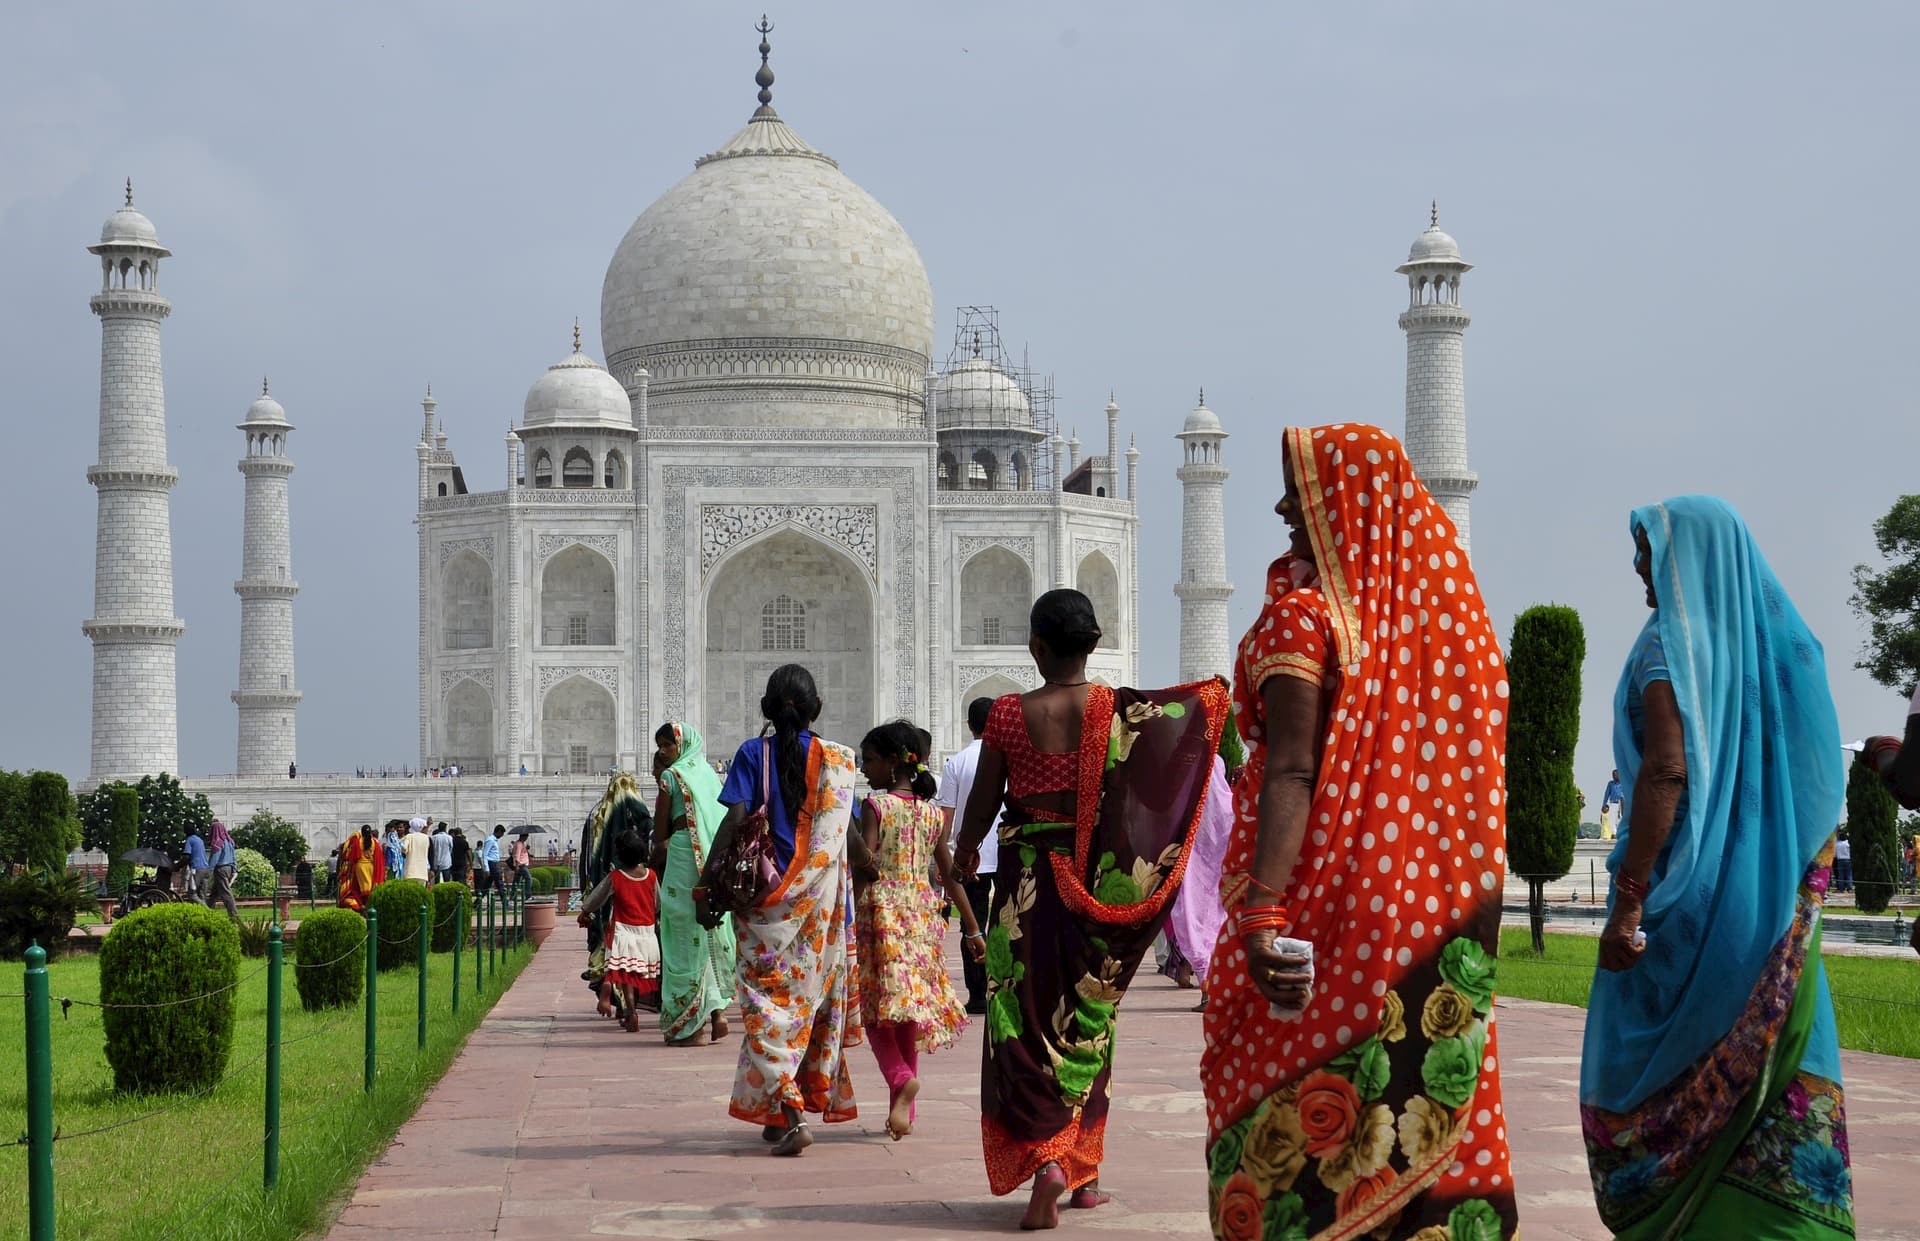 adventour - India - Agra - Taj Mahal